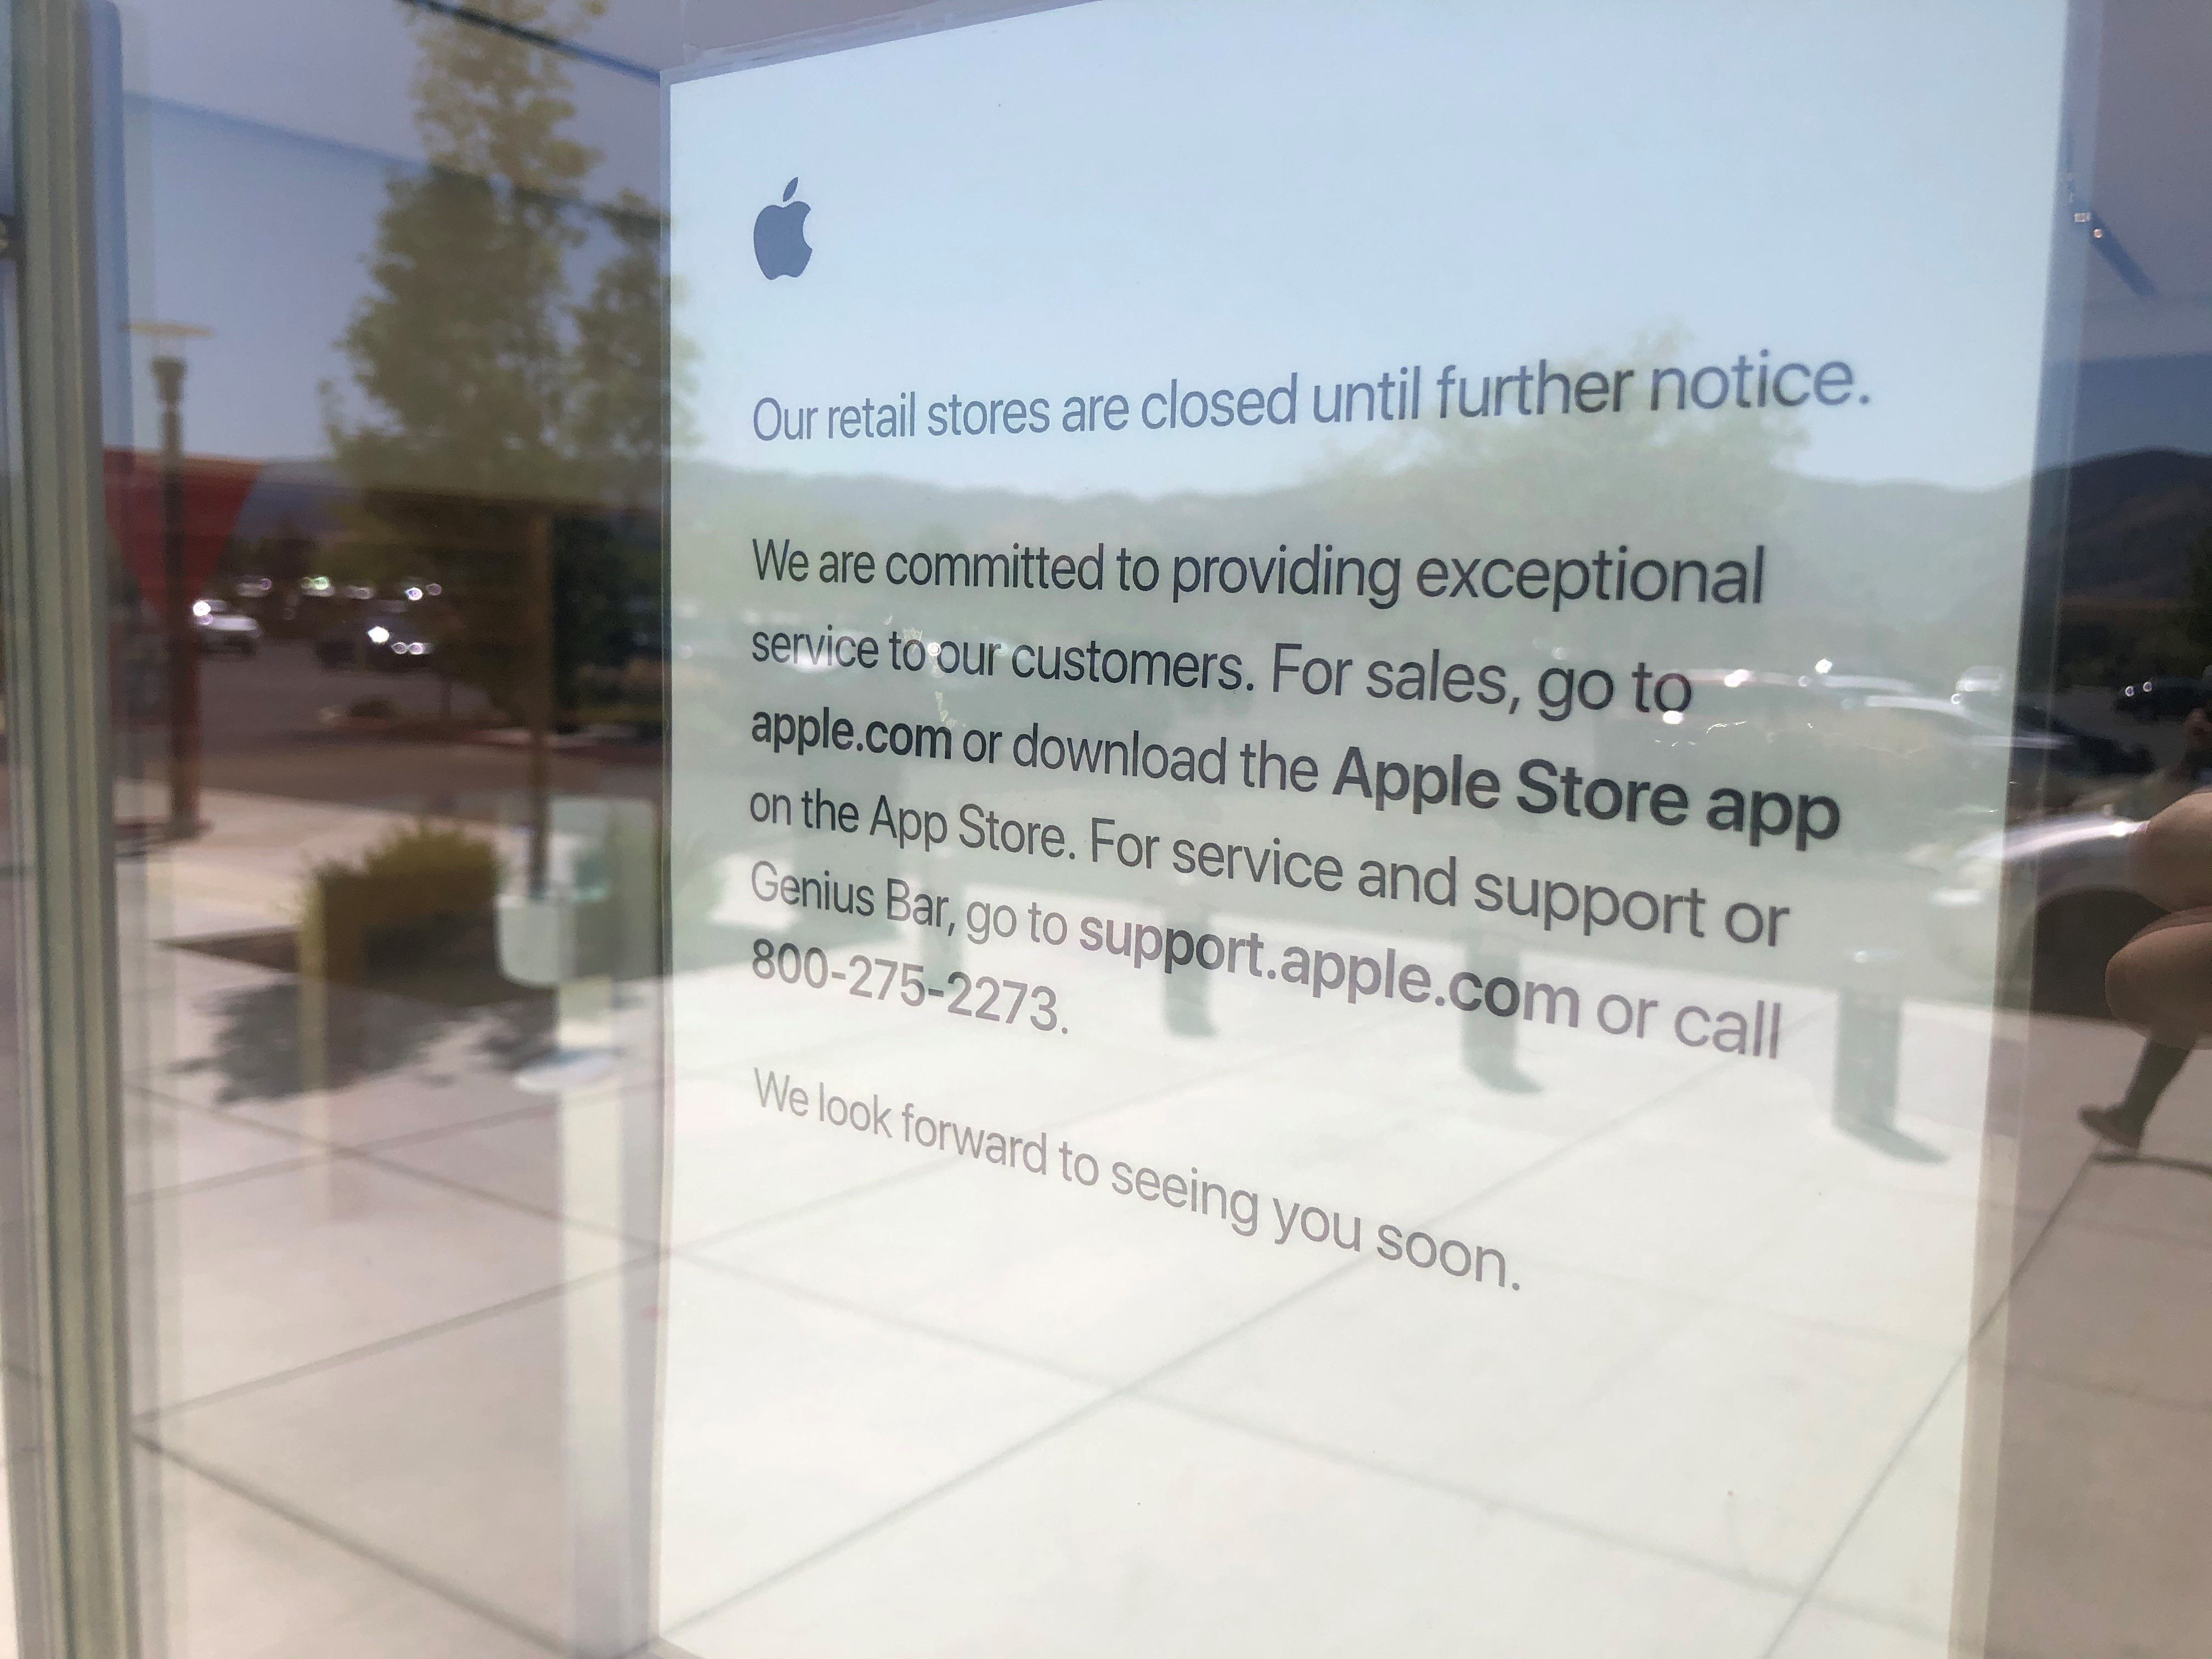 Apple store closings: Coronavirus spikes led to additional closures